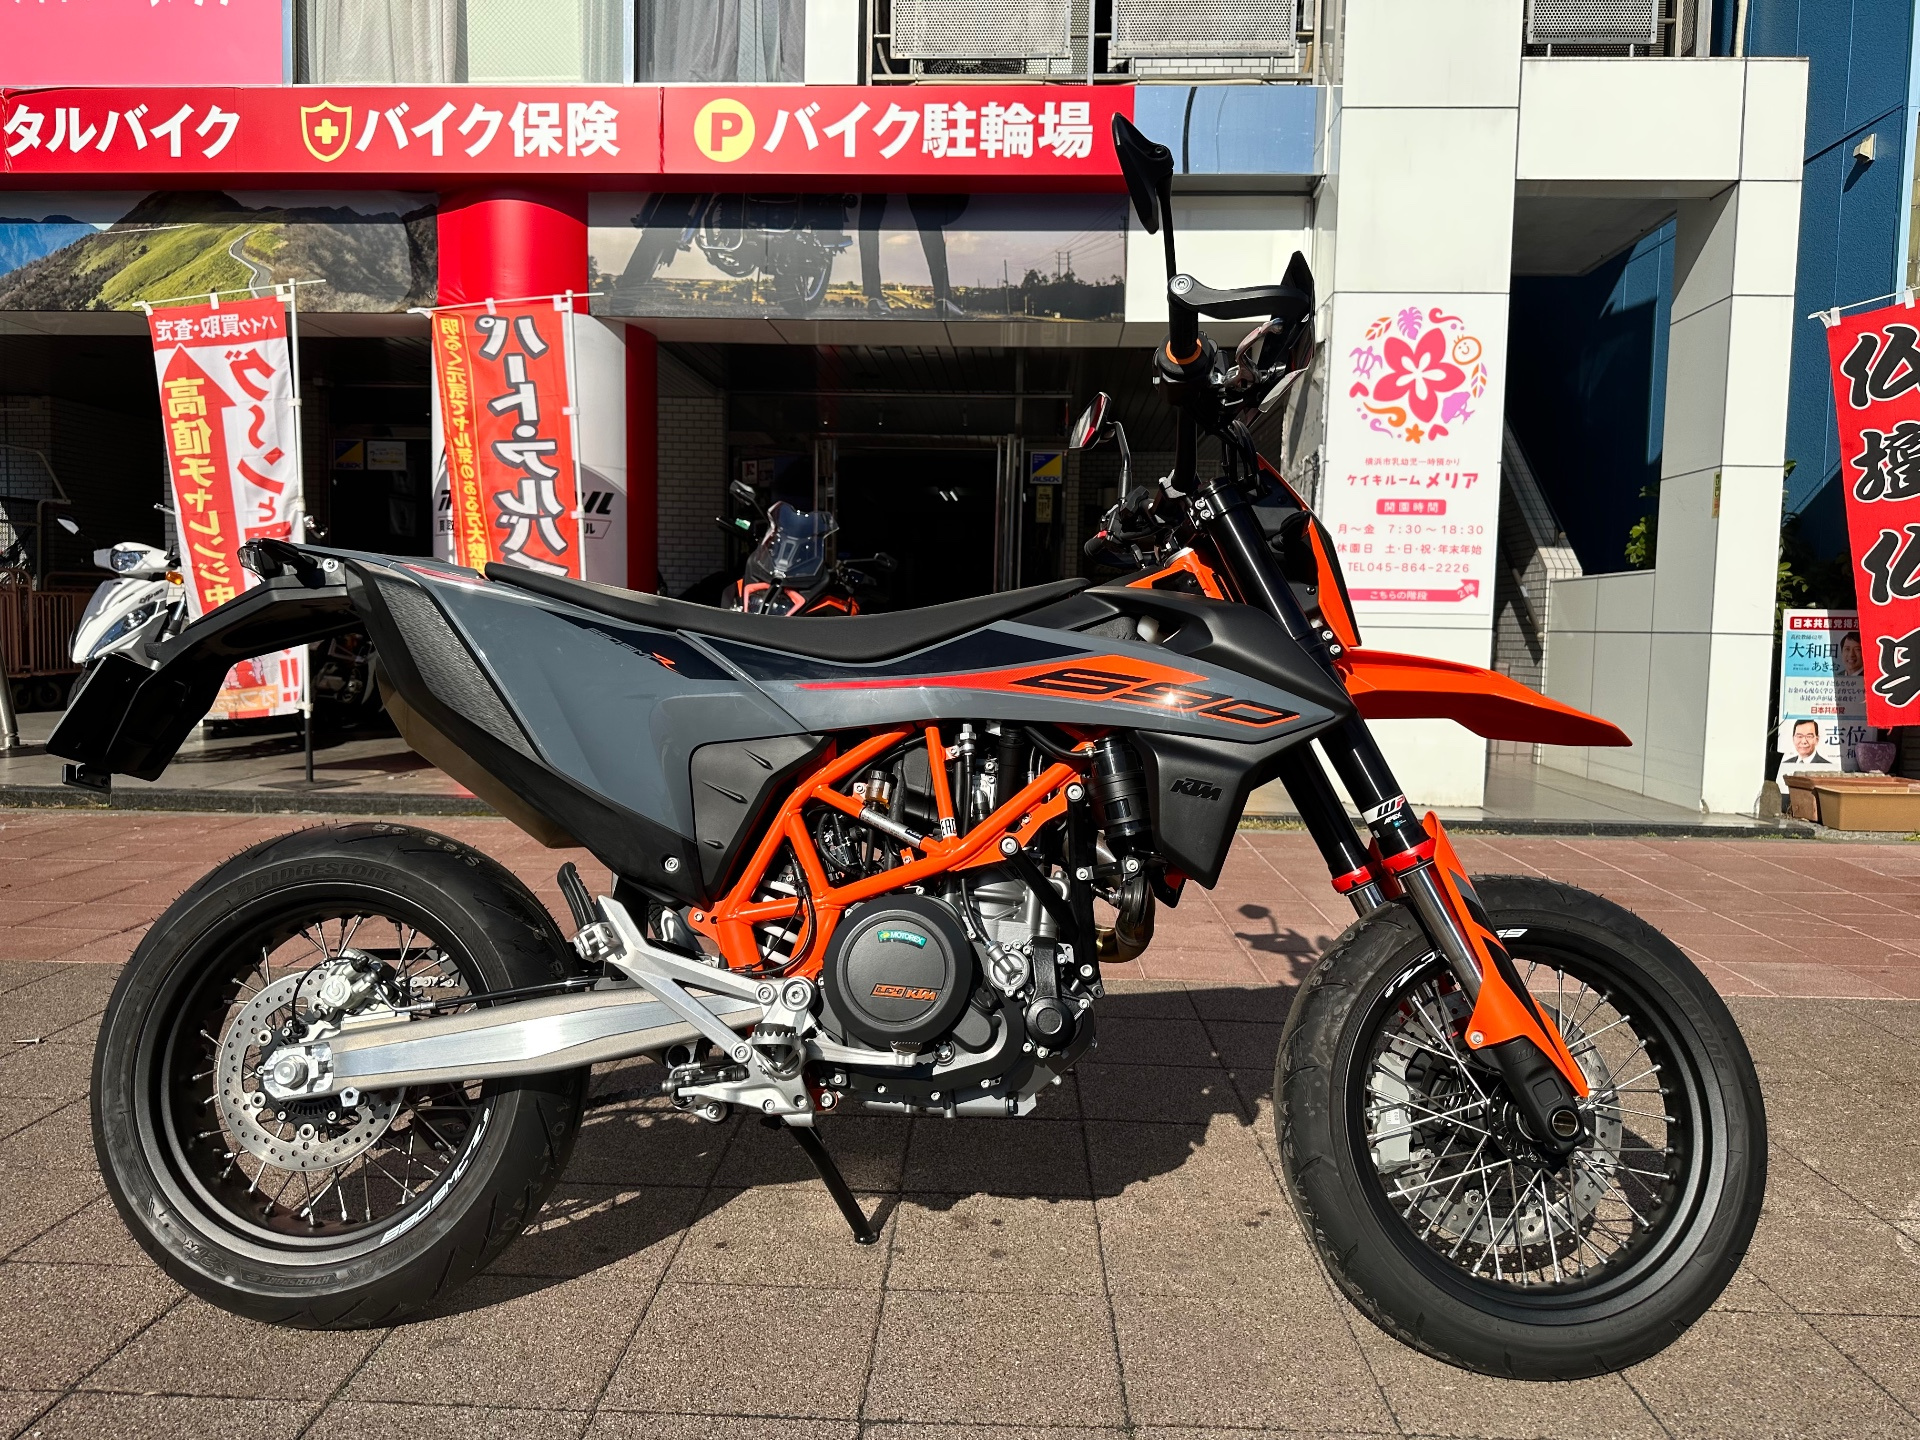 Мотоцикл KTM 690SMC R (1км)